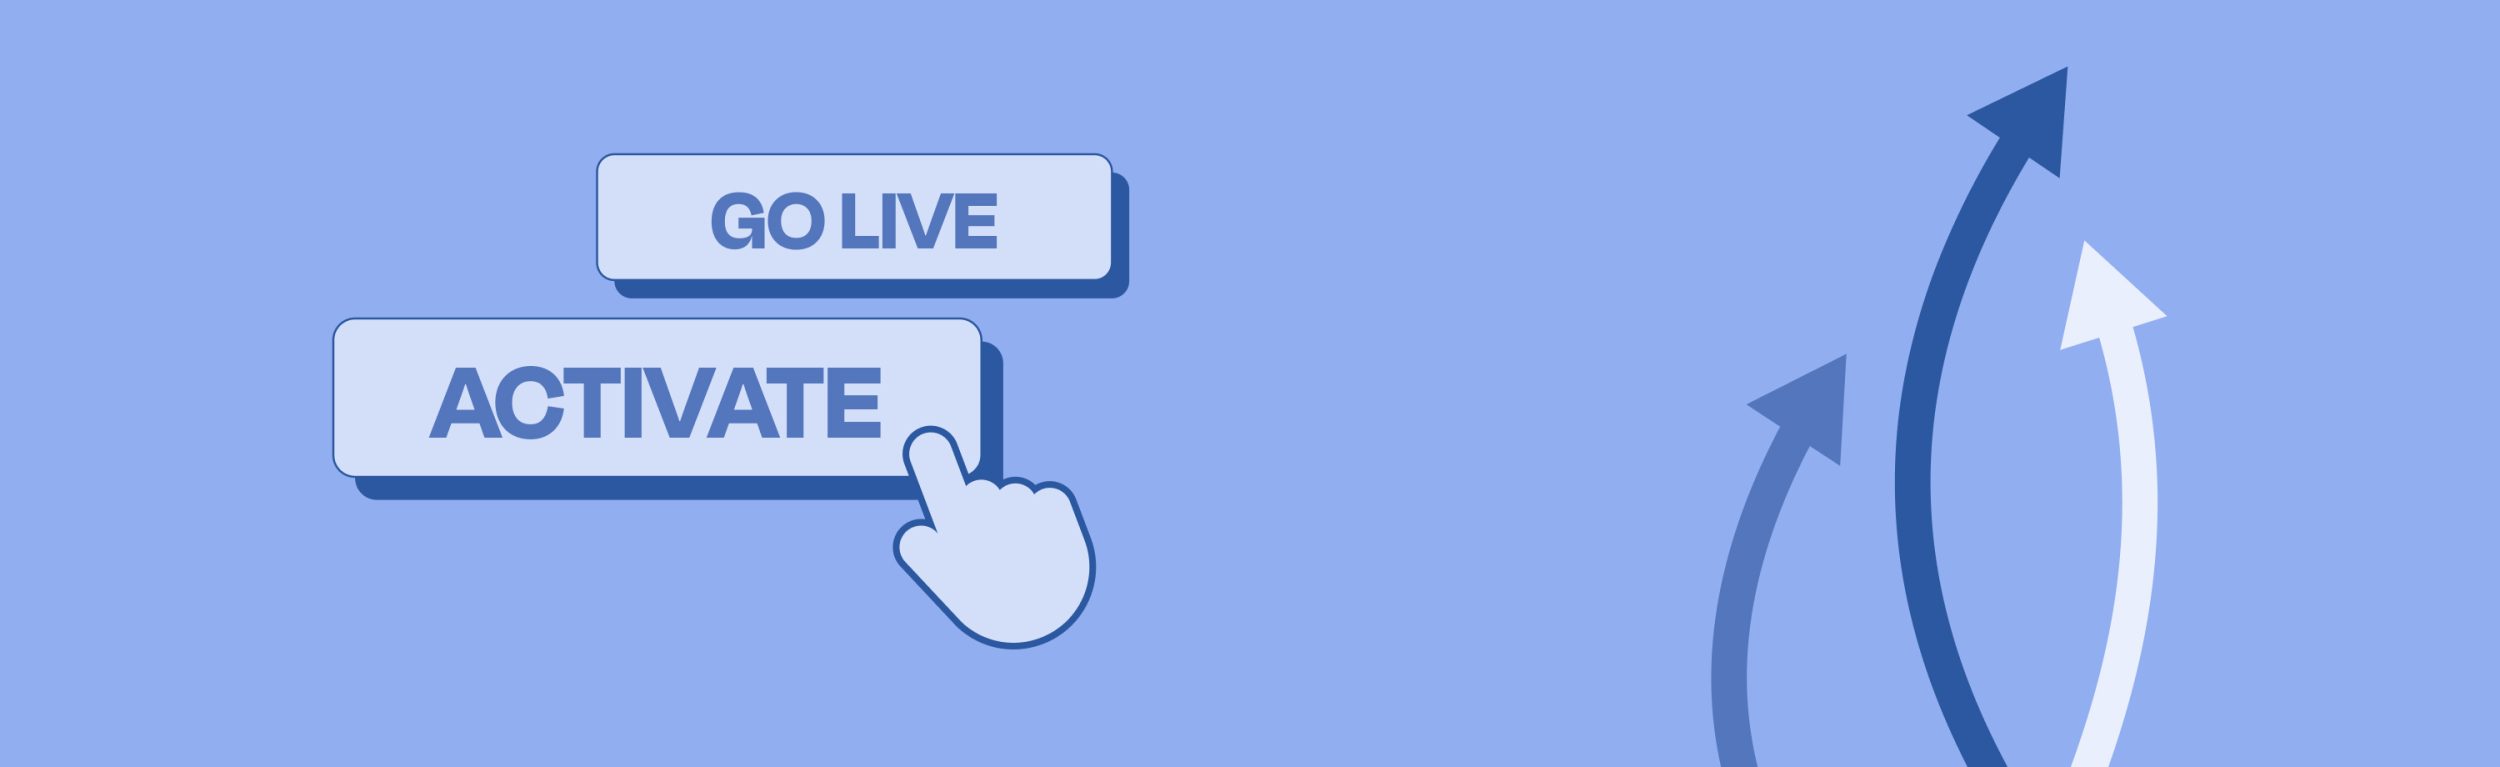 Go Live Activate Button Illustration Banner